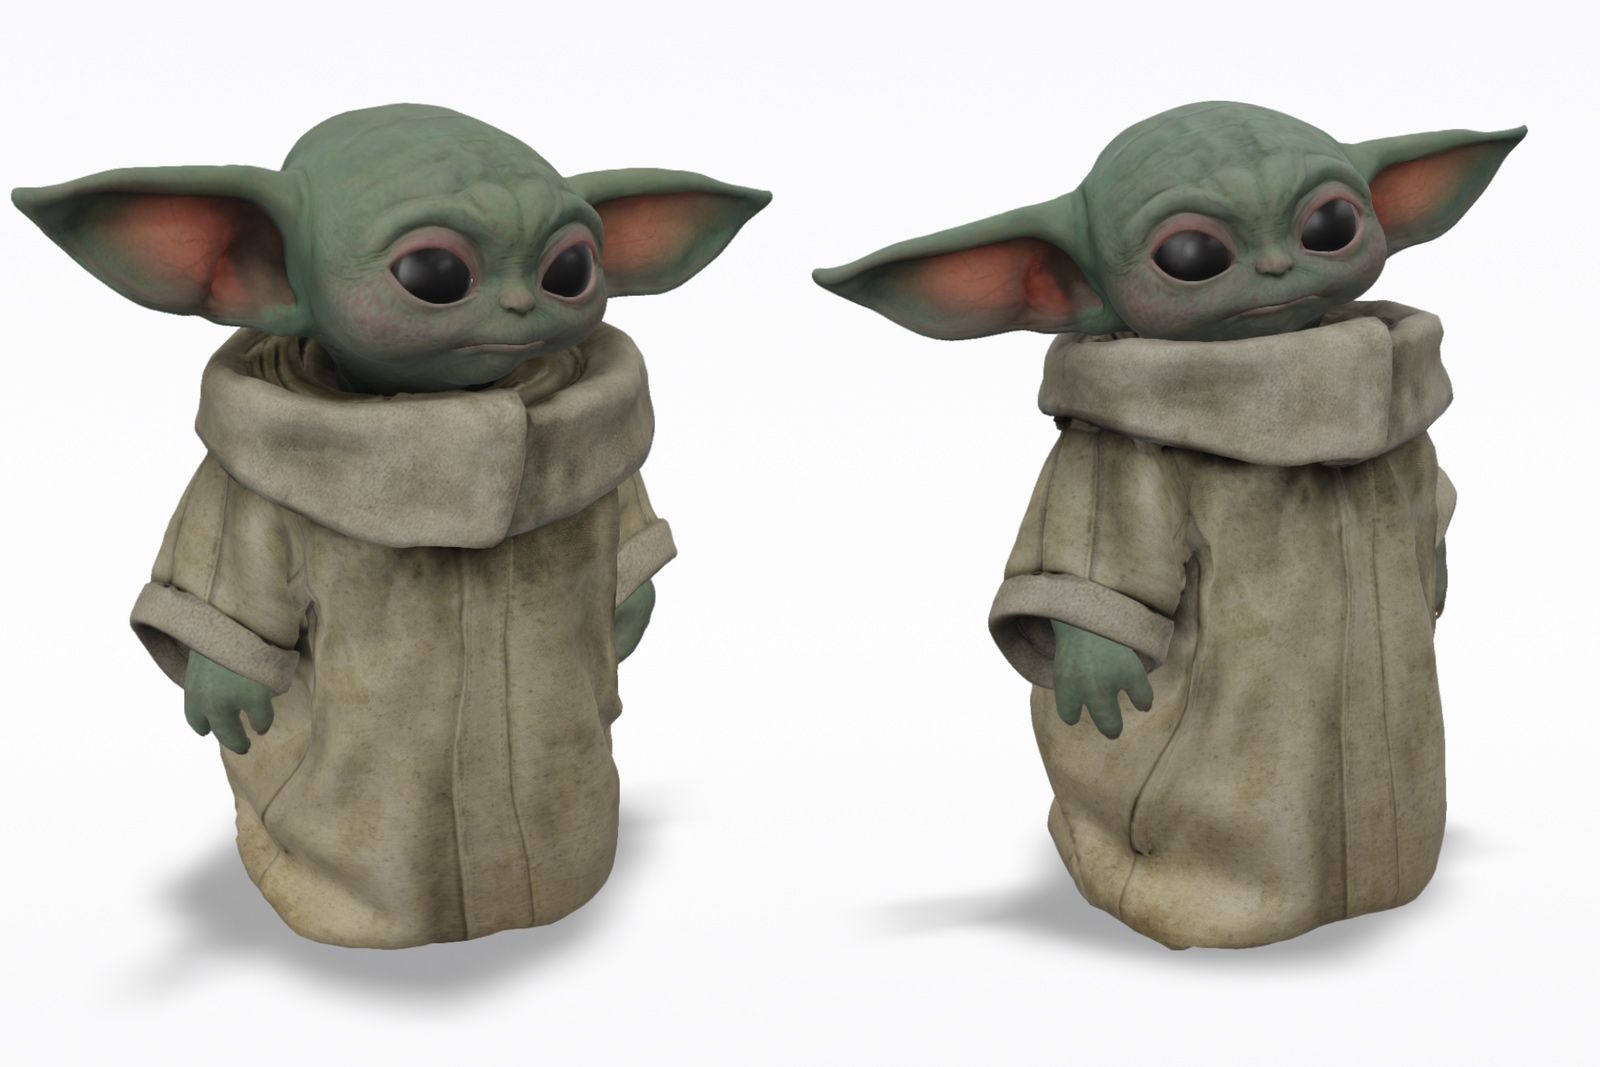 Baby Yoda vs Baby Appa